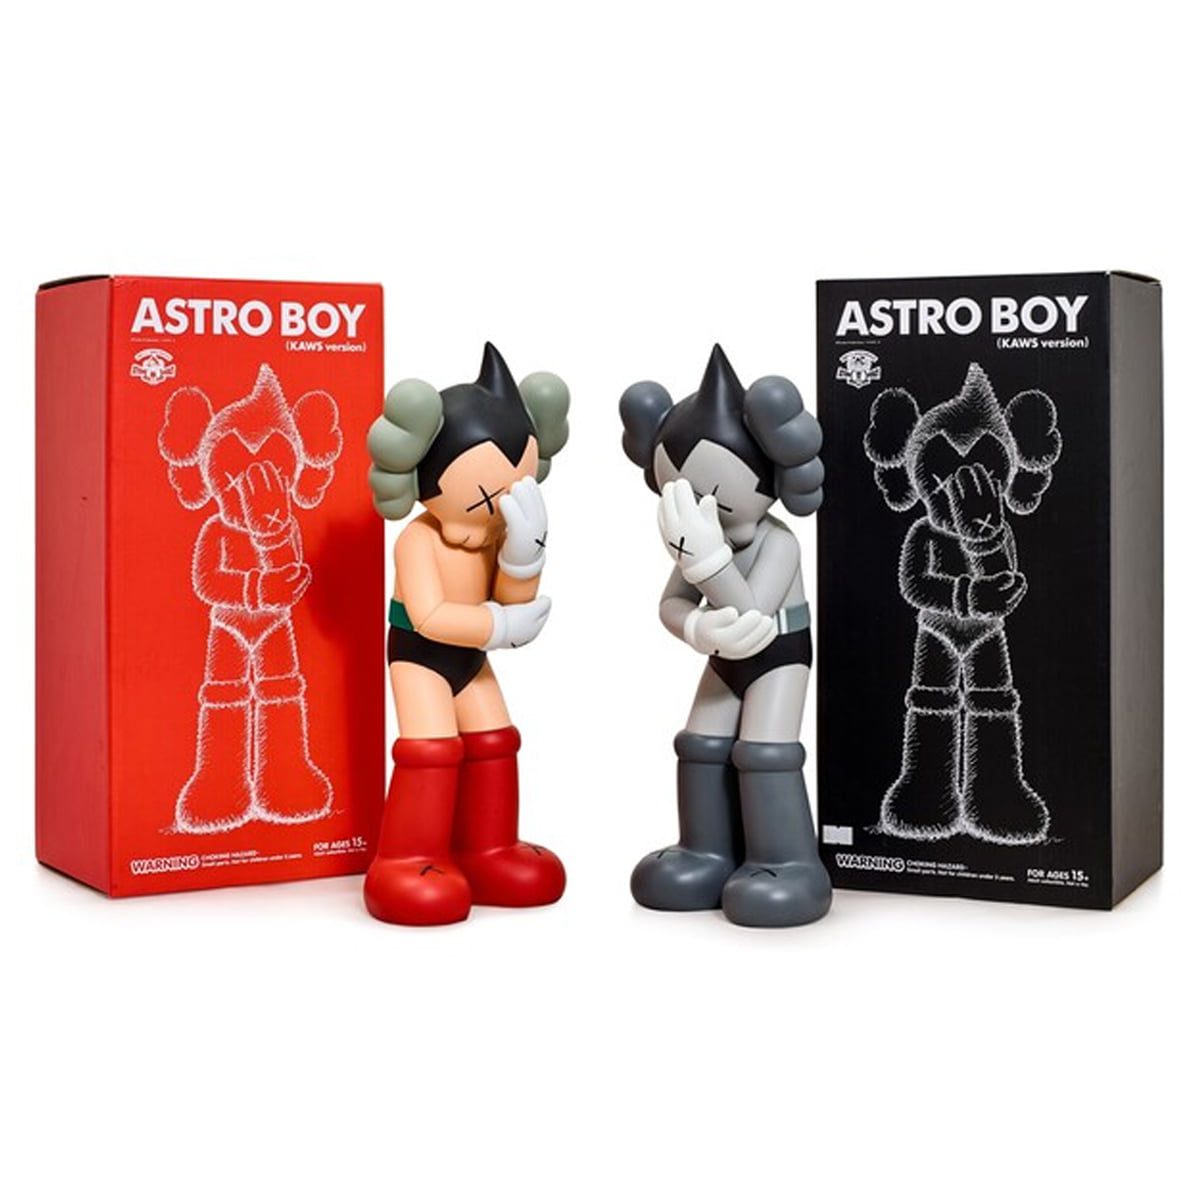 KAWS - Astro Boy Original and Mono with boxes